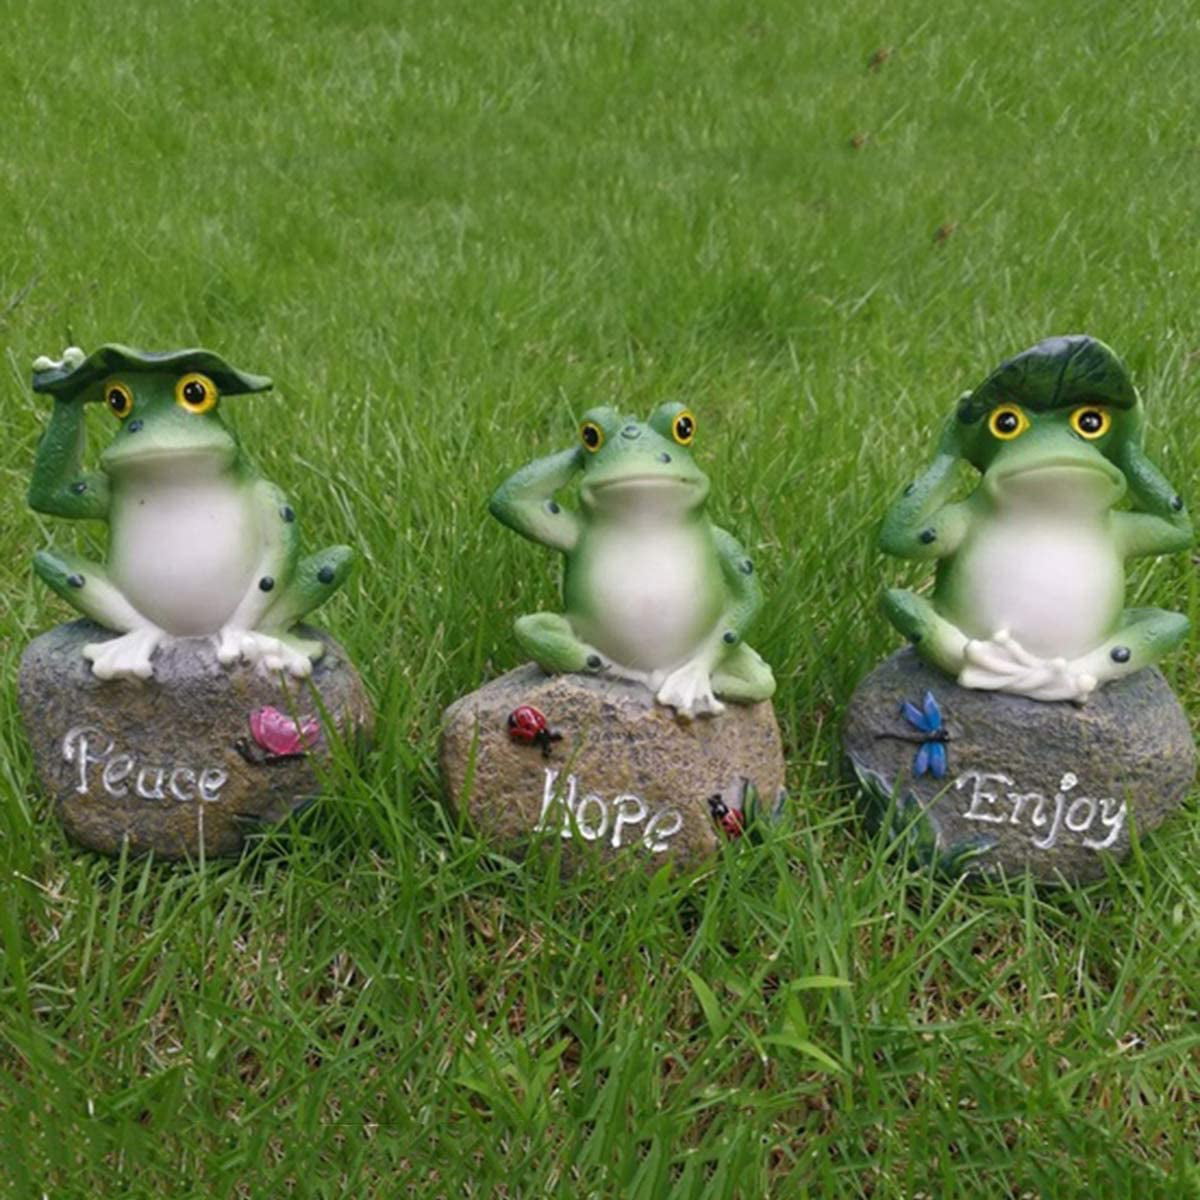 Realistic Effect Frogs Ornament Figurine Sculpture Ornament 